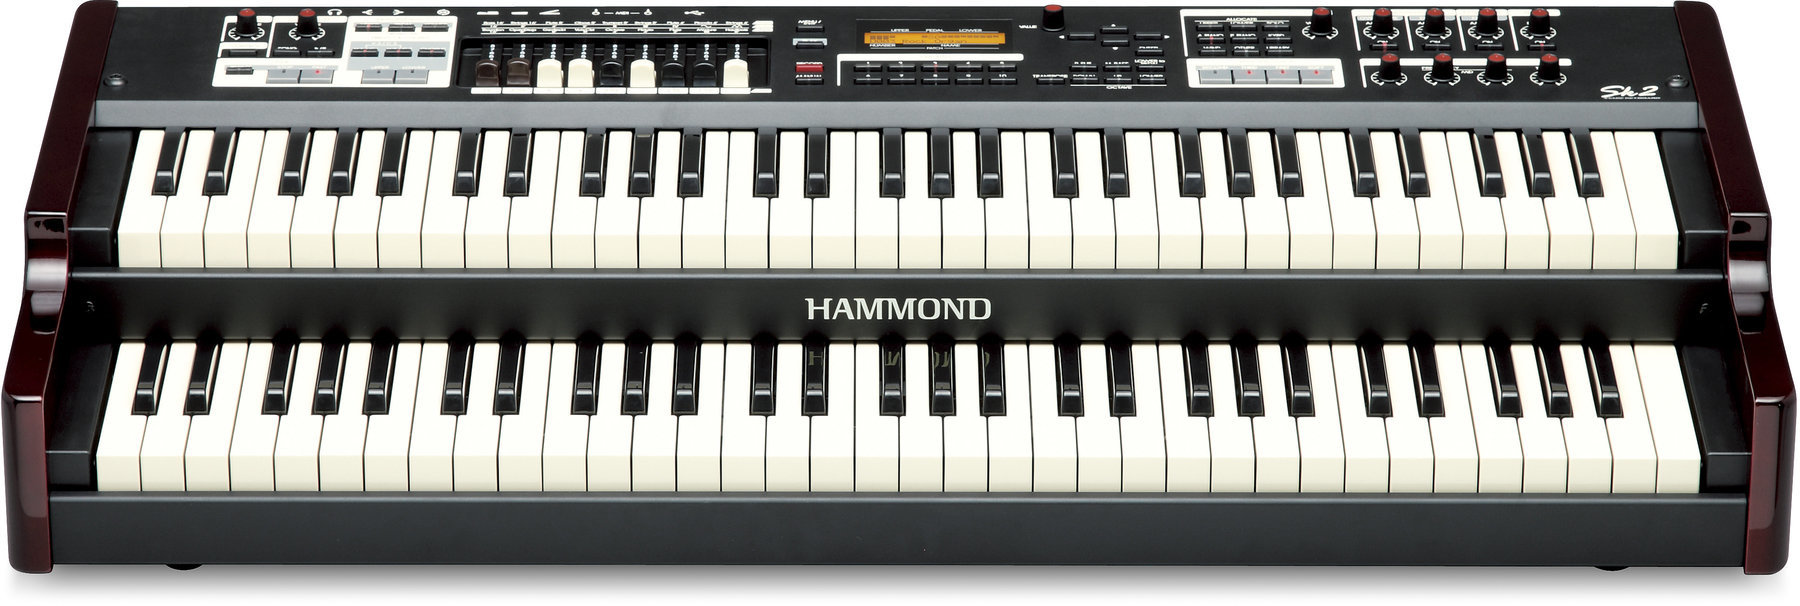 Electronic Organ Hammond SK2